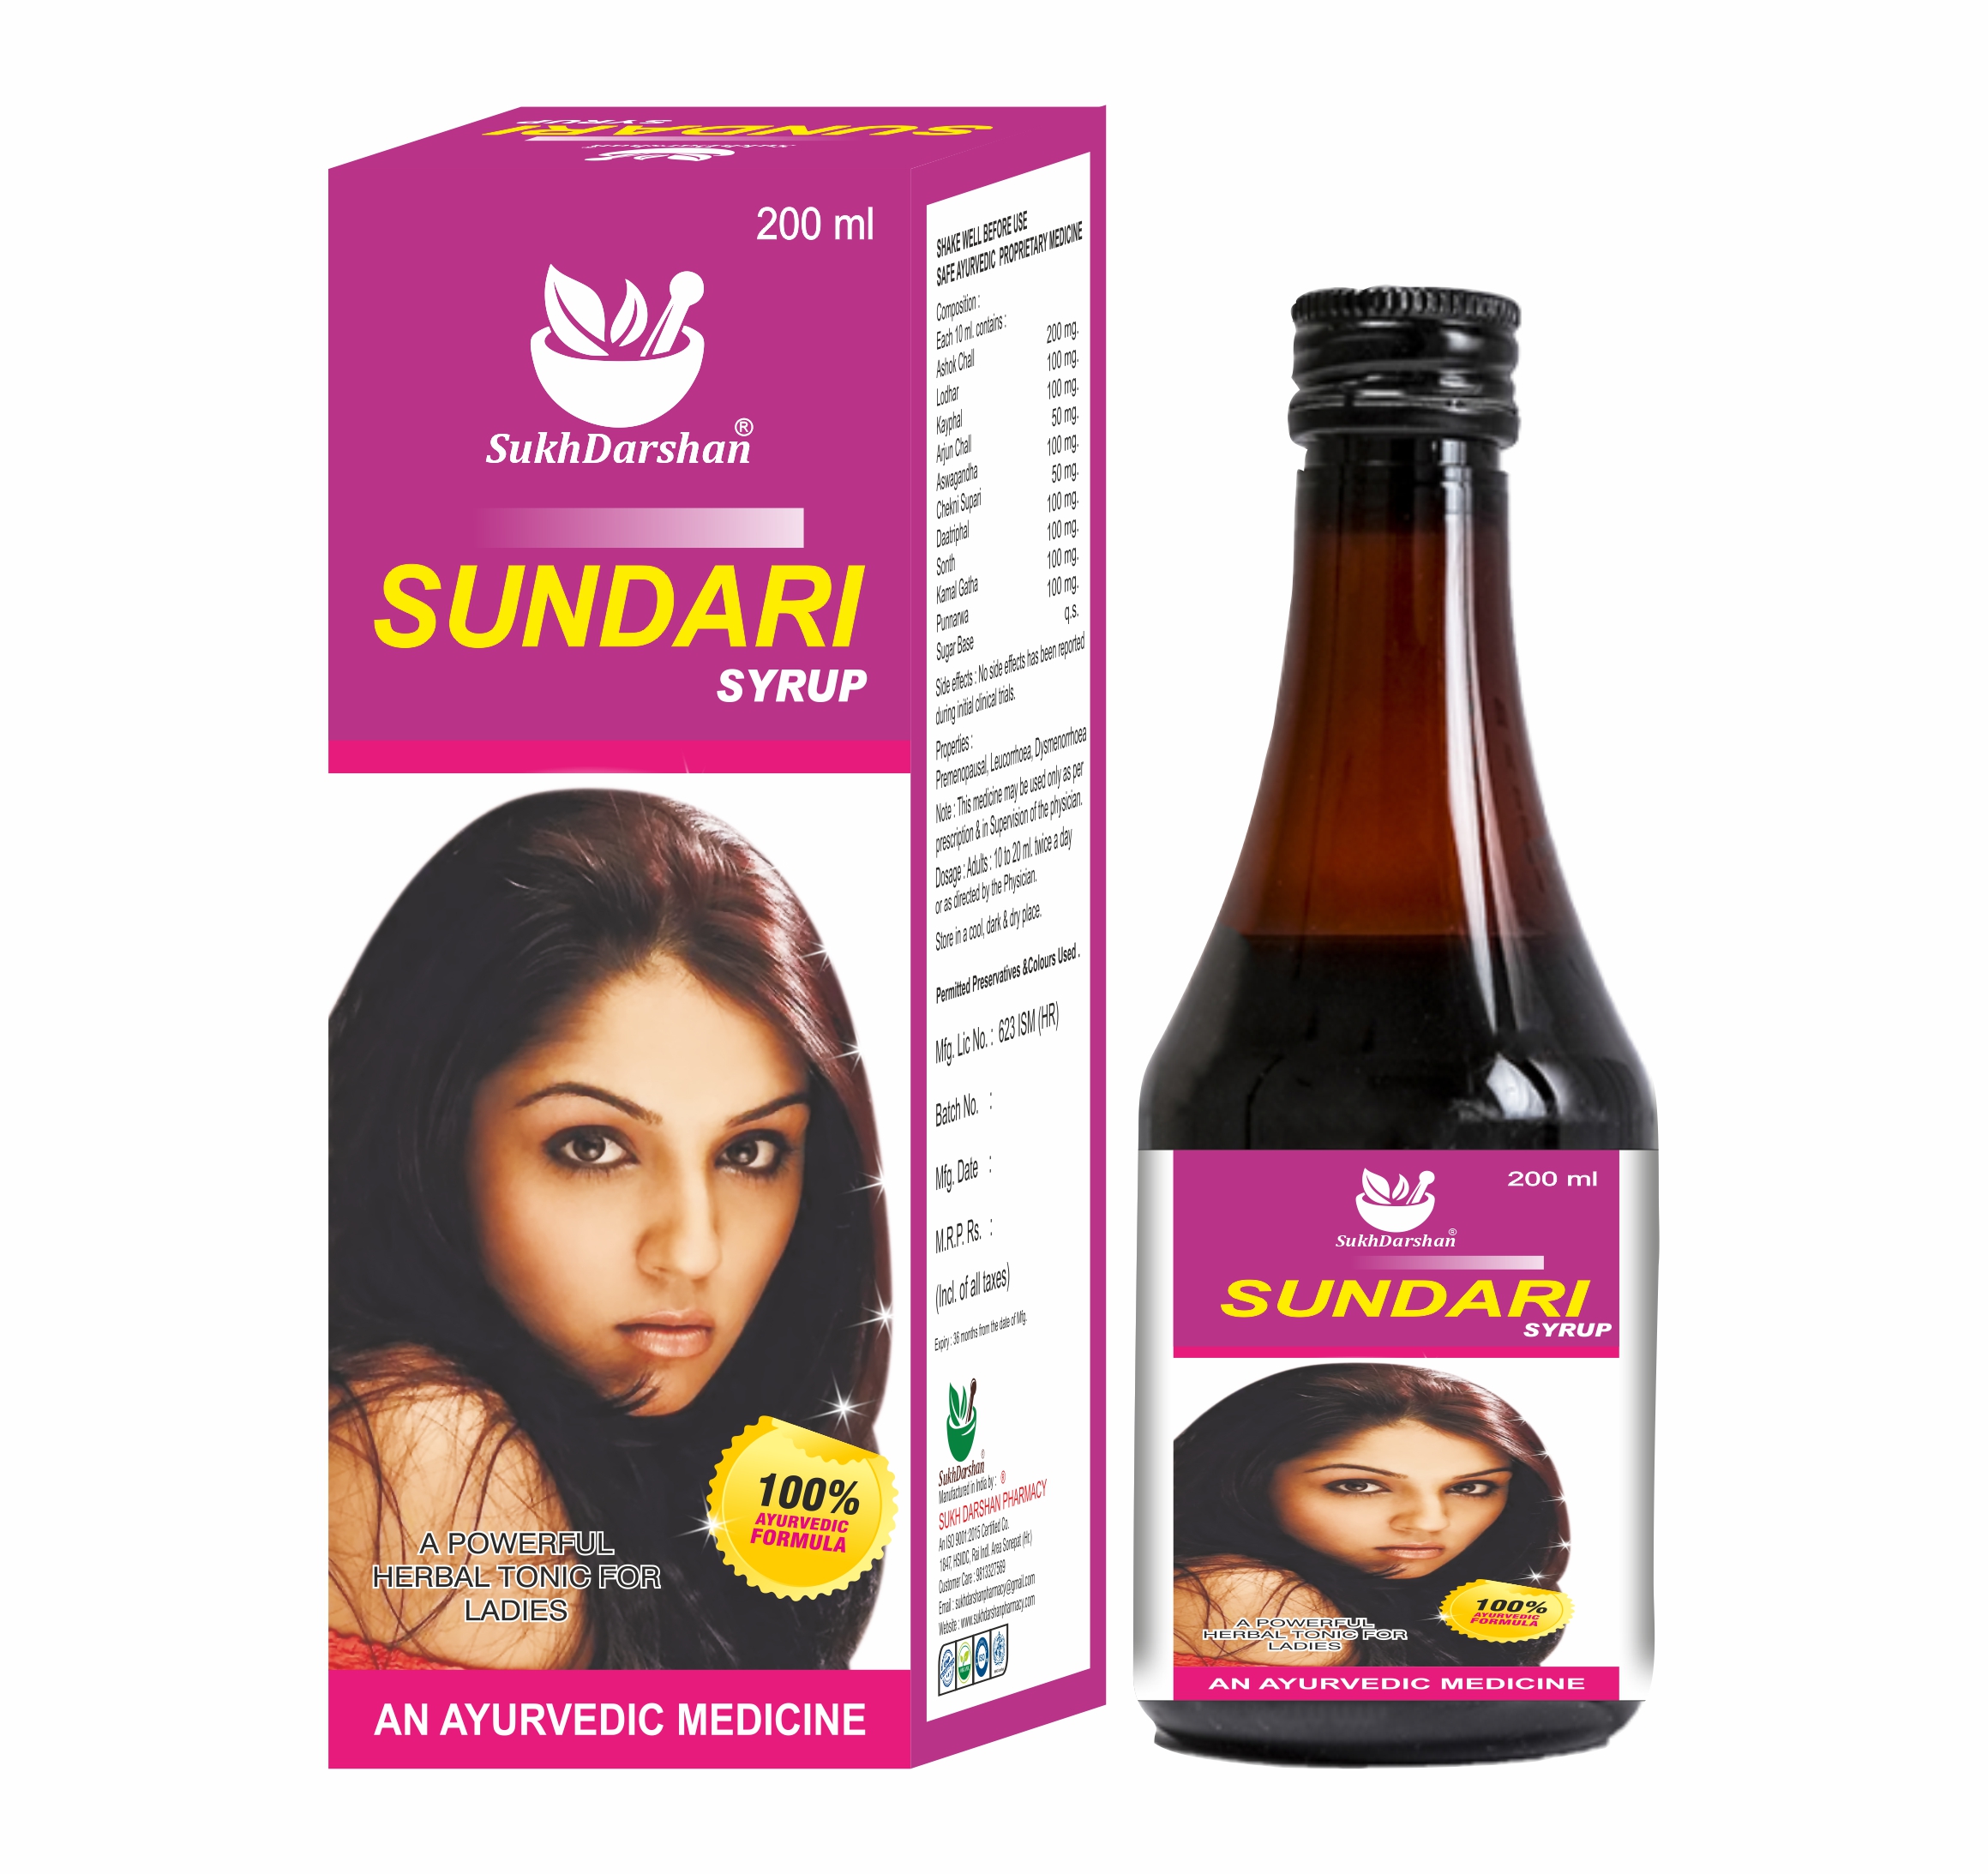 Sundari Syrup